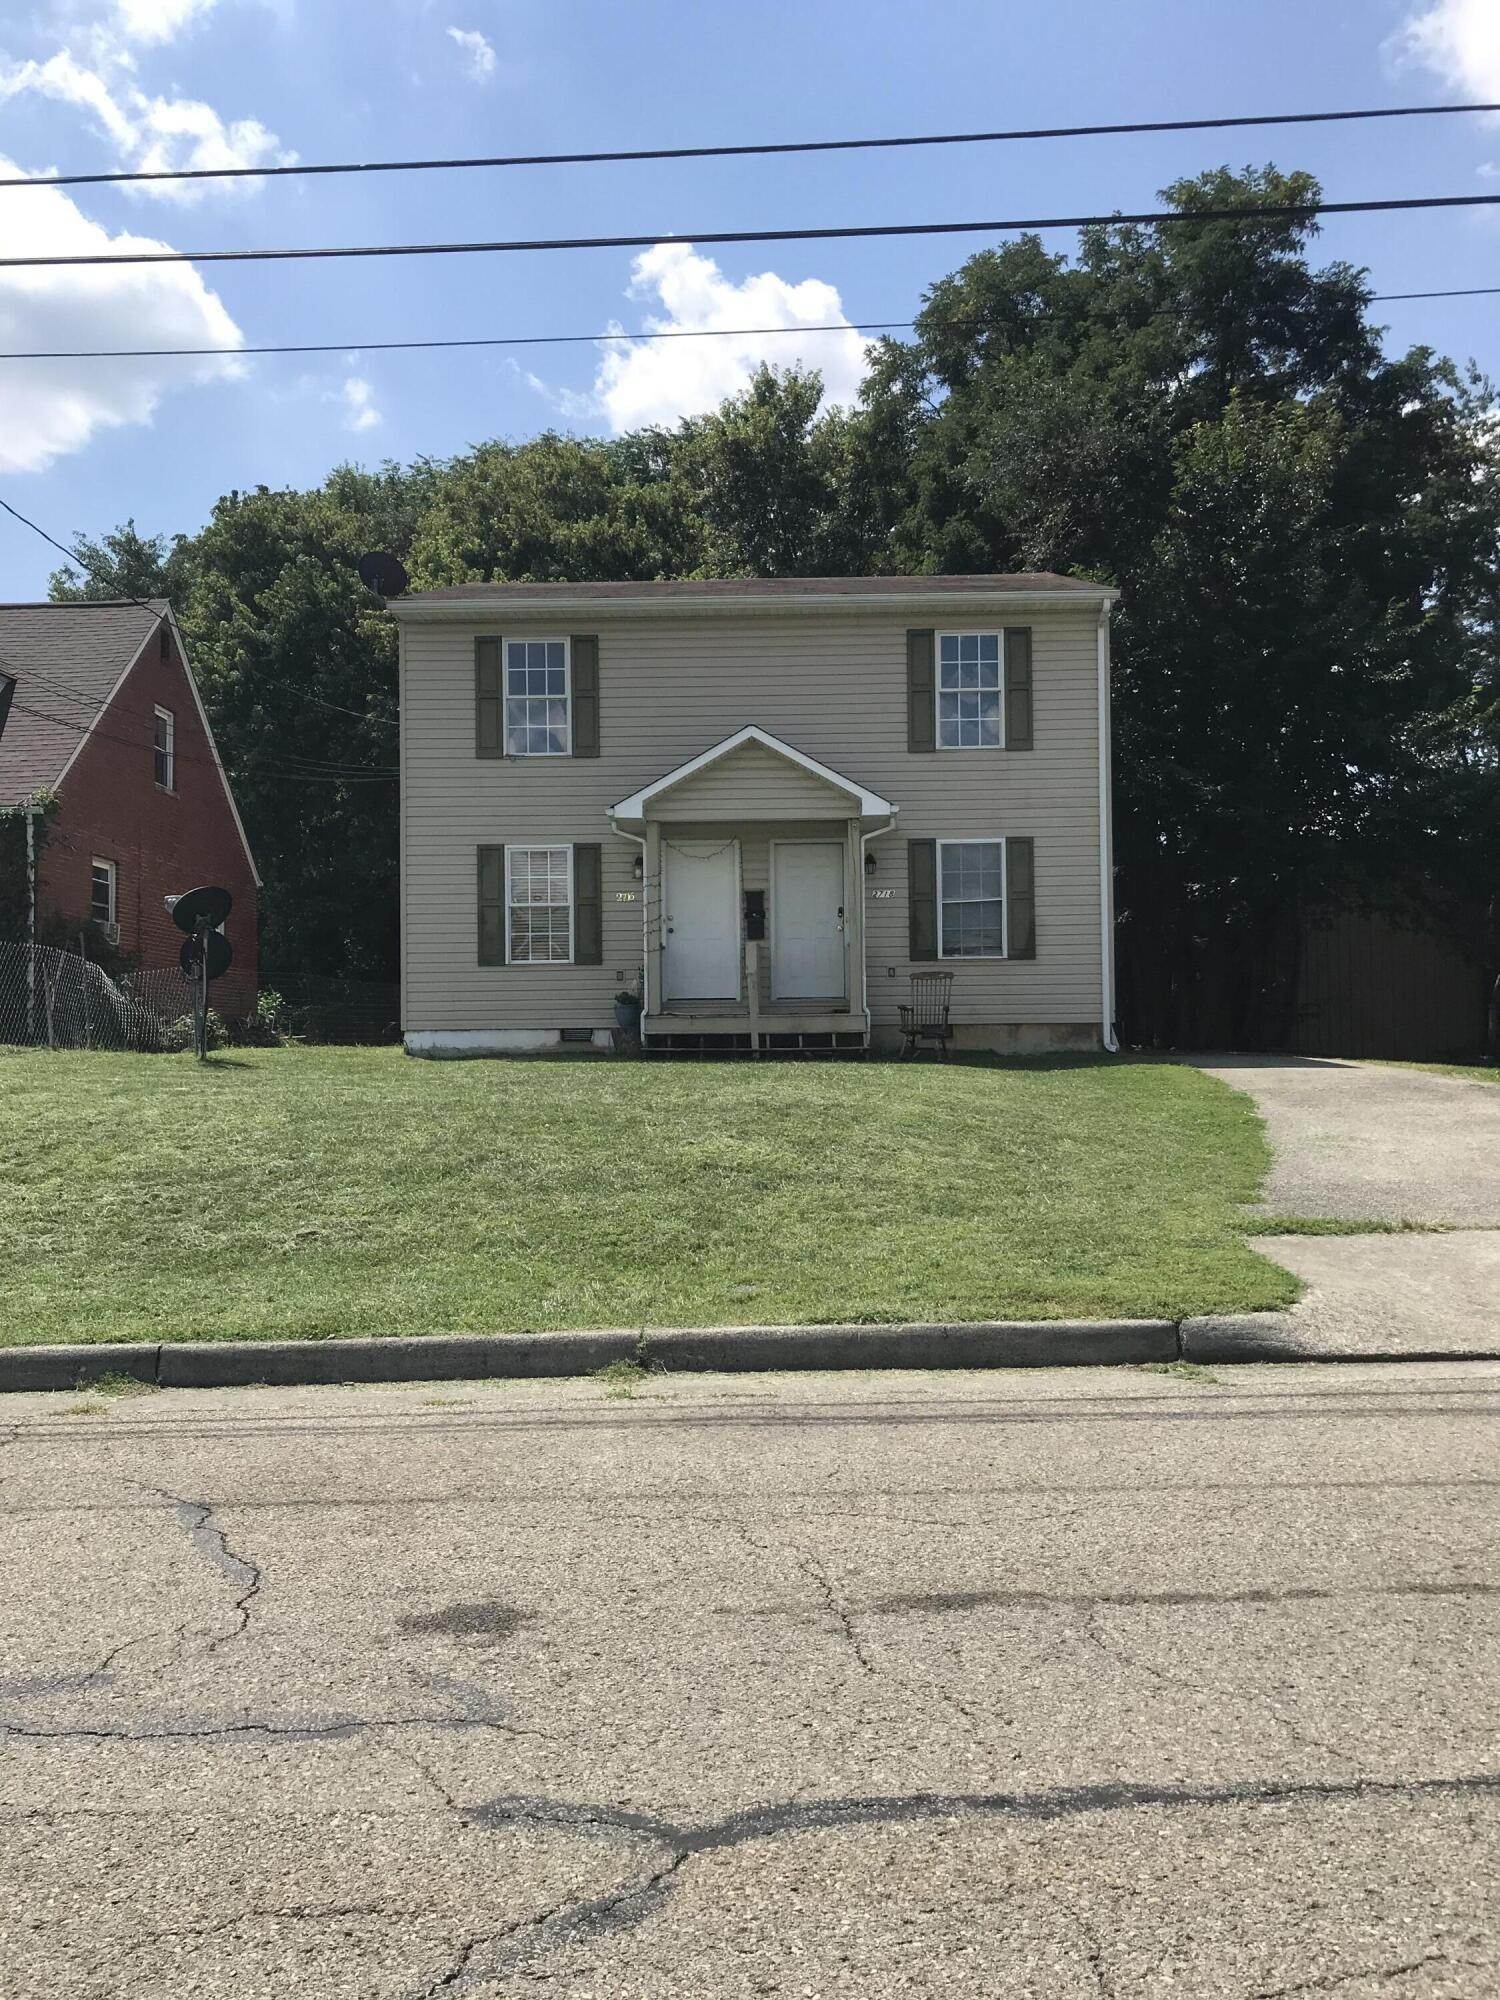 2. Duplex Homes for Sale at Roanoke, VA 24012